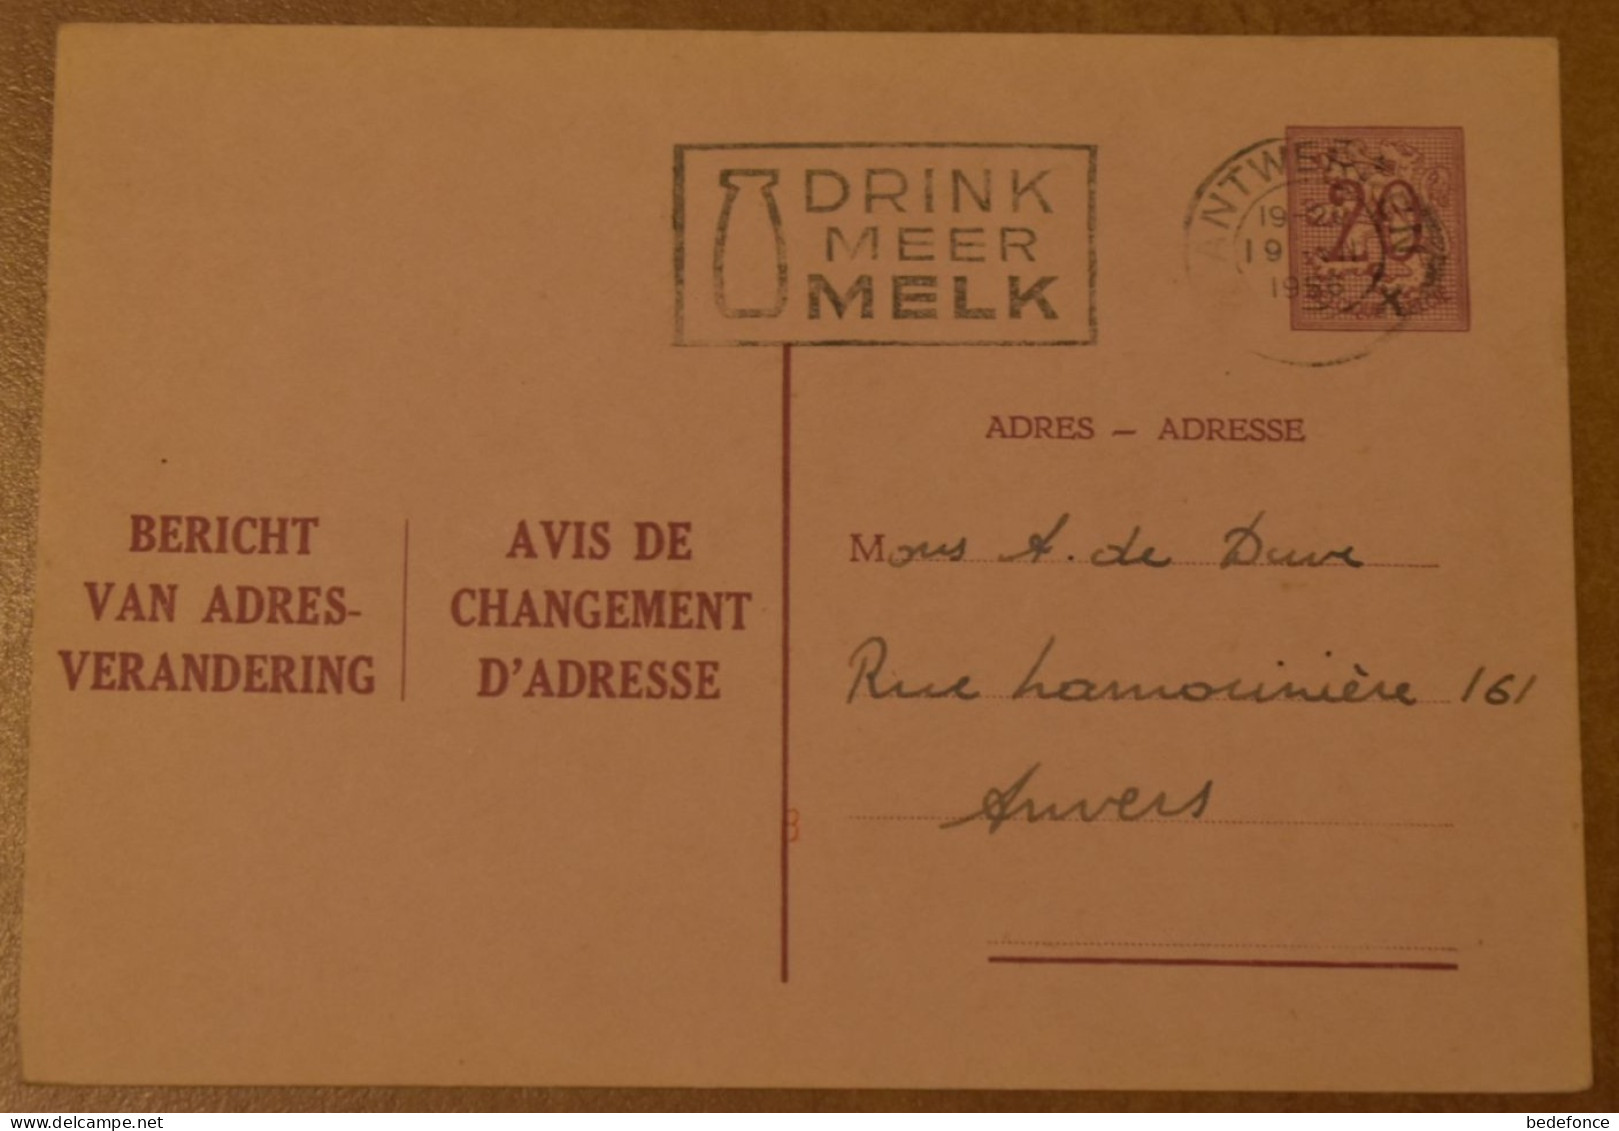 Belgique - Avis Changement Adresse - Prétimbrée - 20 C - Lion - Circulé En 1956 - Flamme "Drink Meer Melk" - Avis Changement Adresse